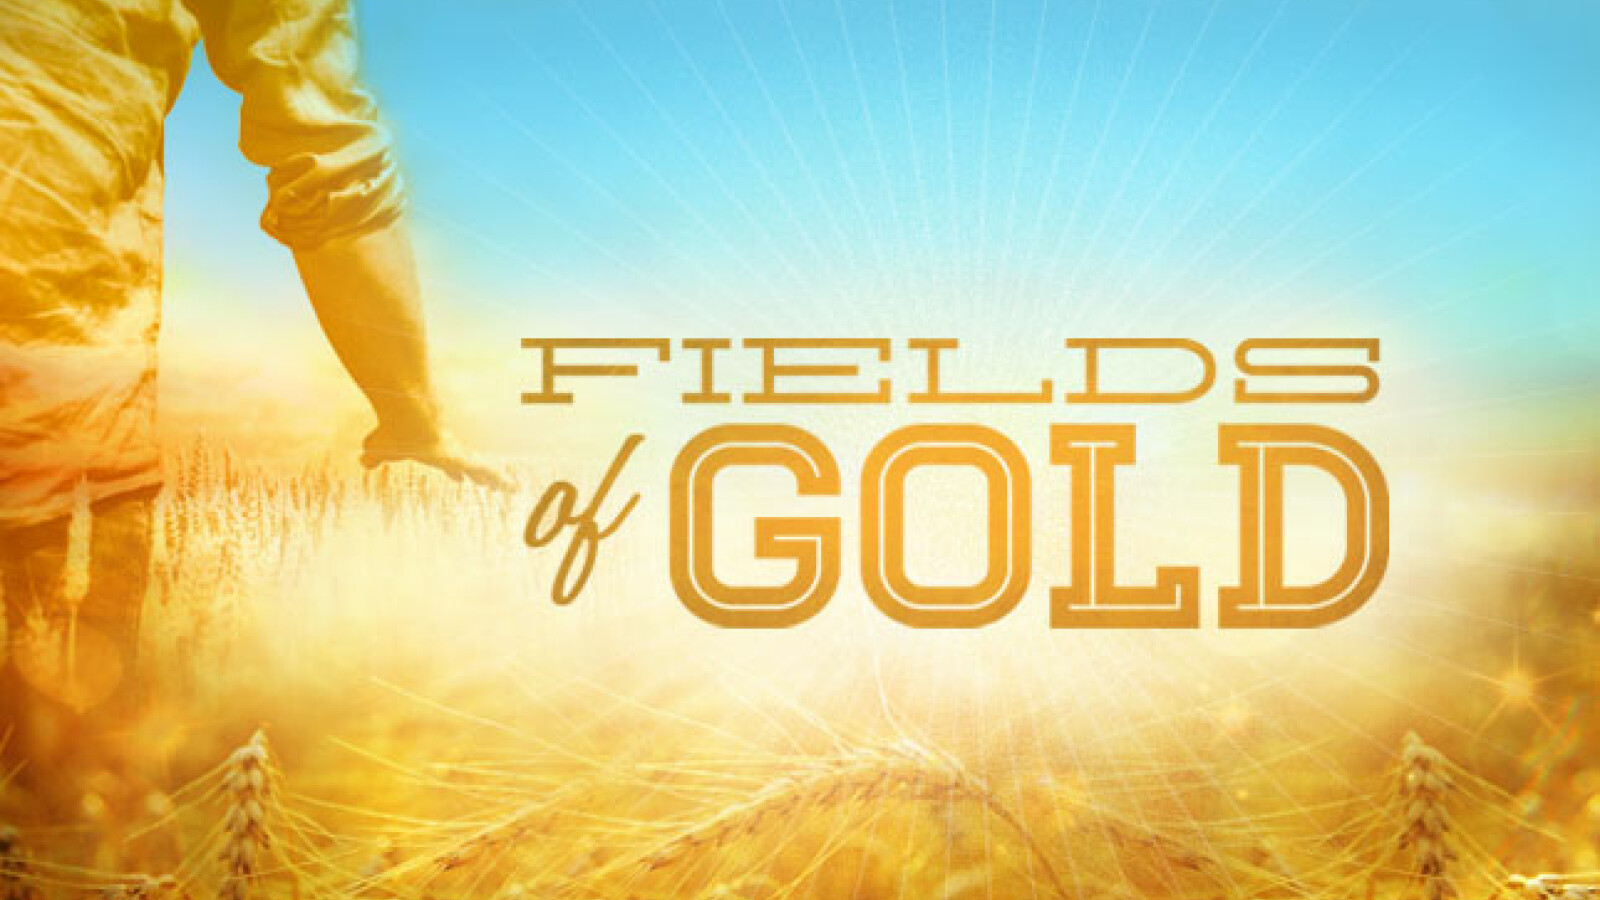 Fields of Gold